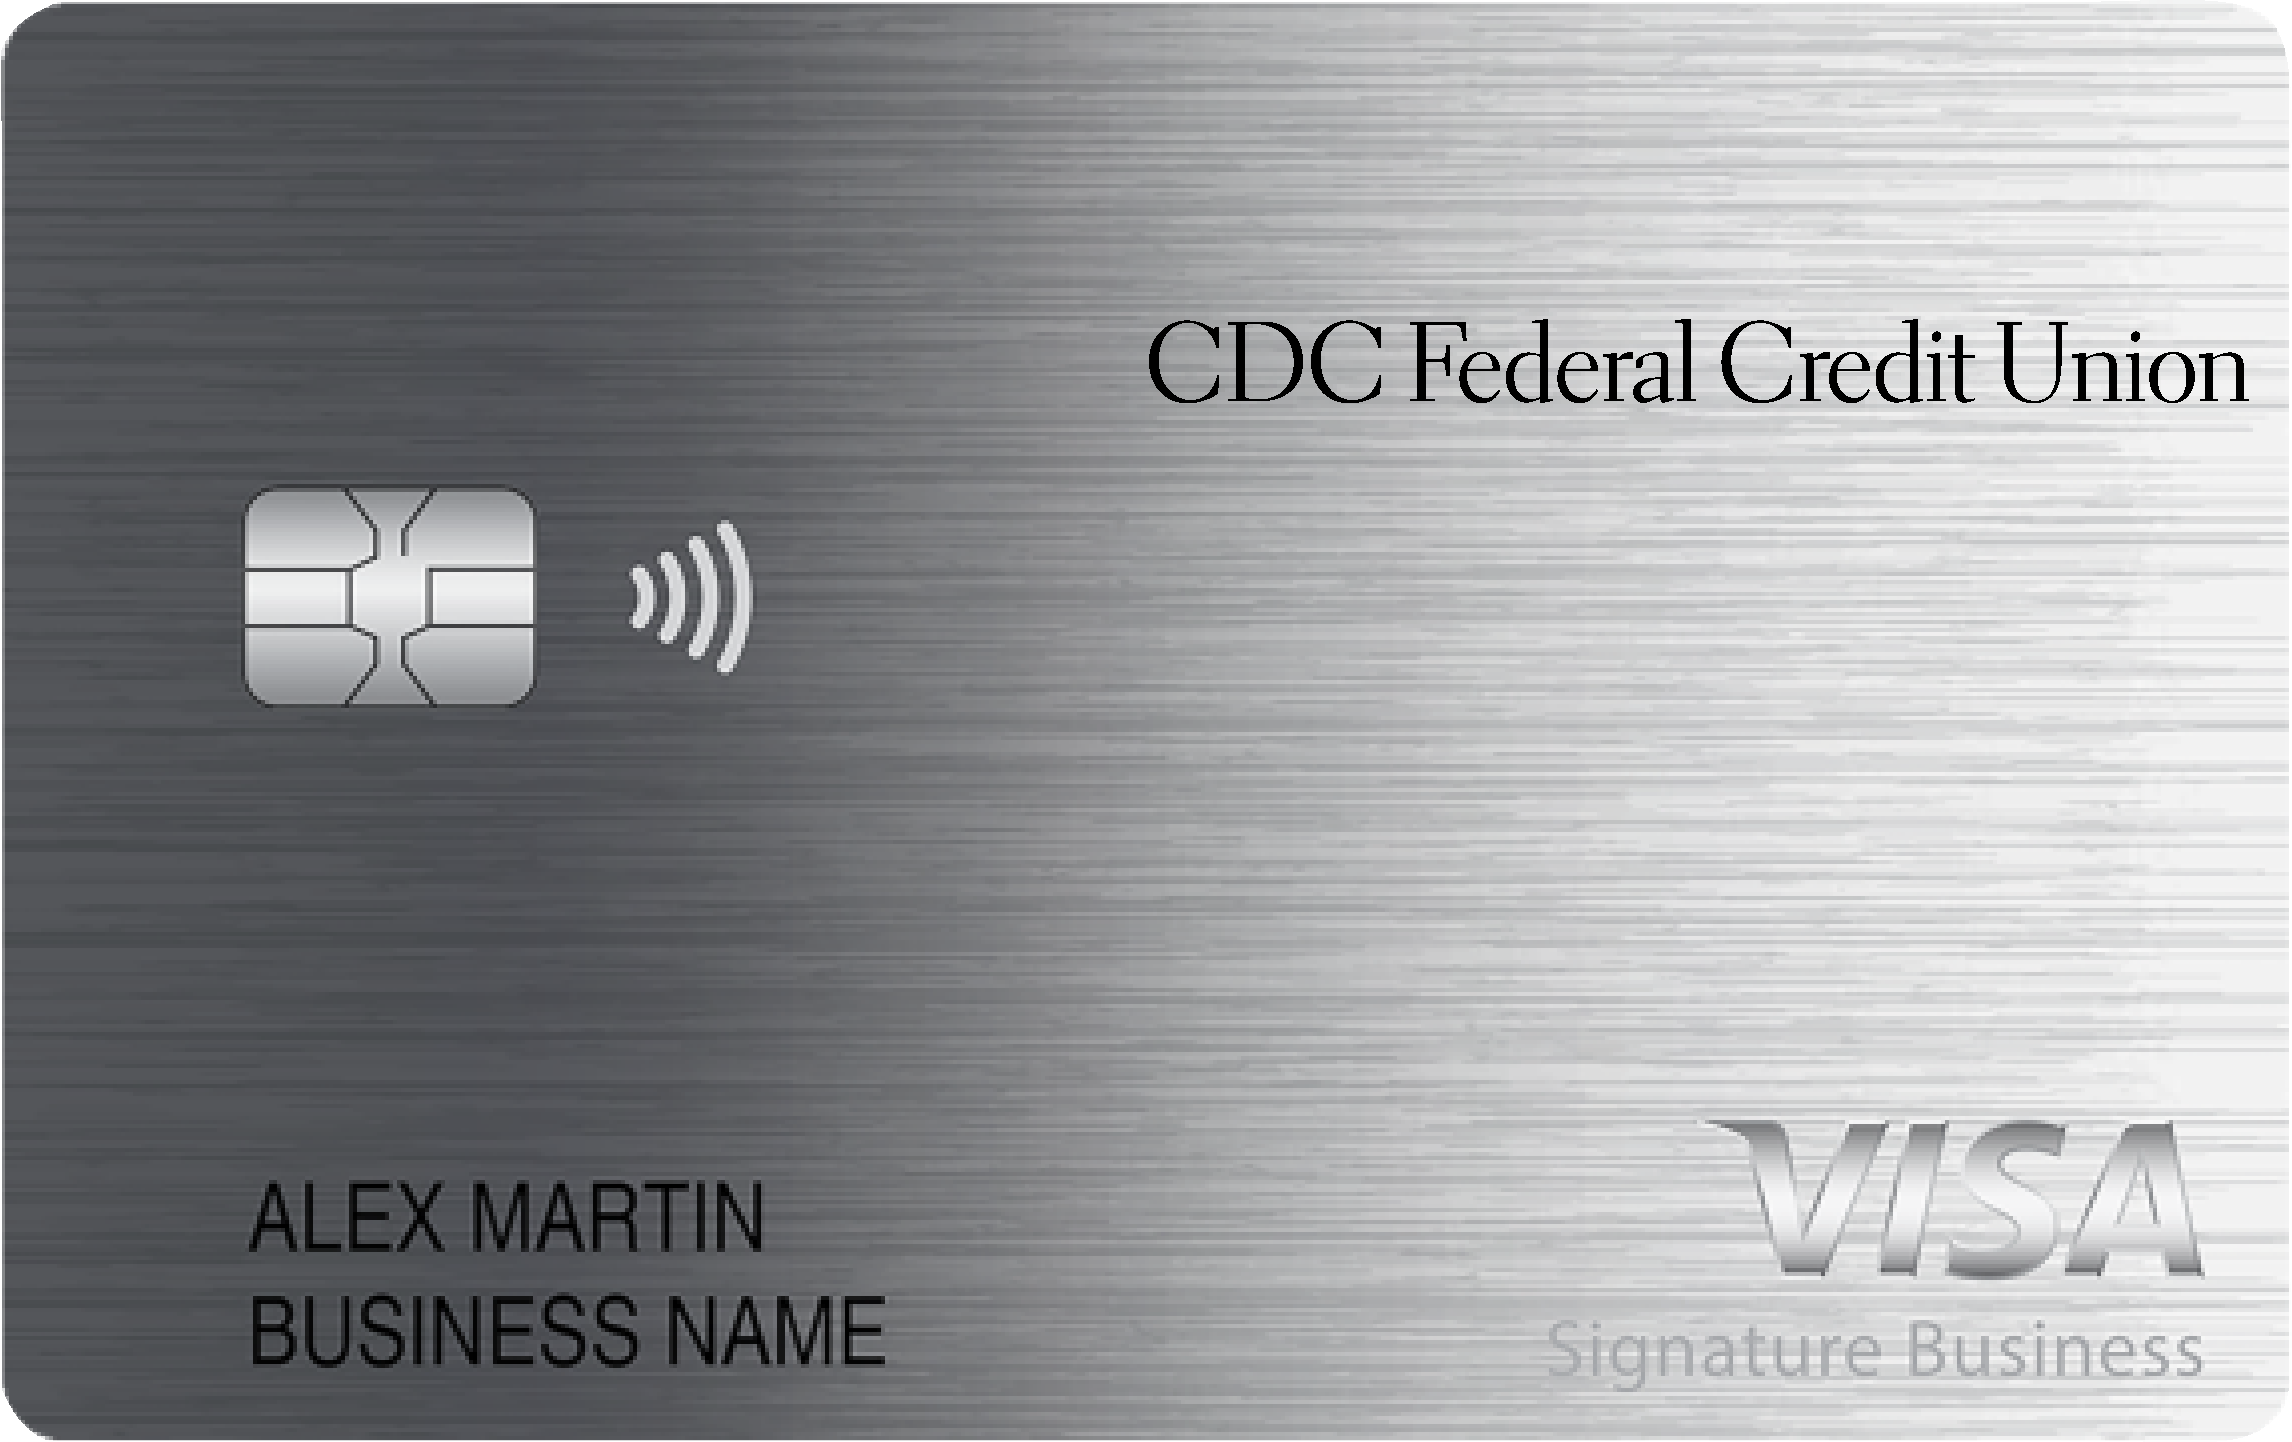 CDC Federal Credit Union Smart Business Rewards Card